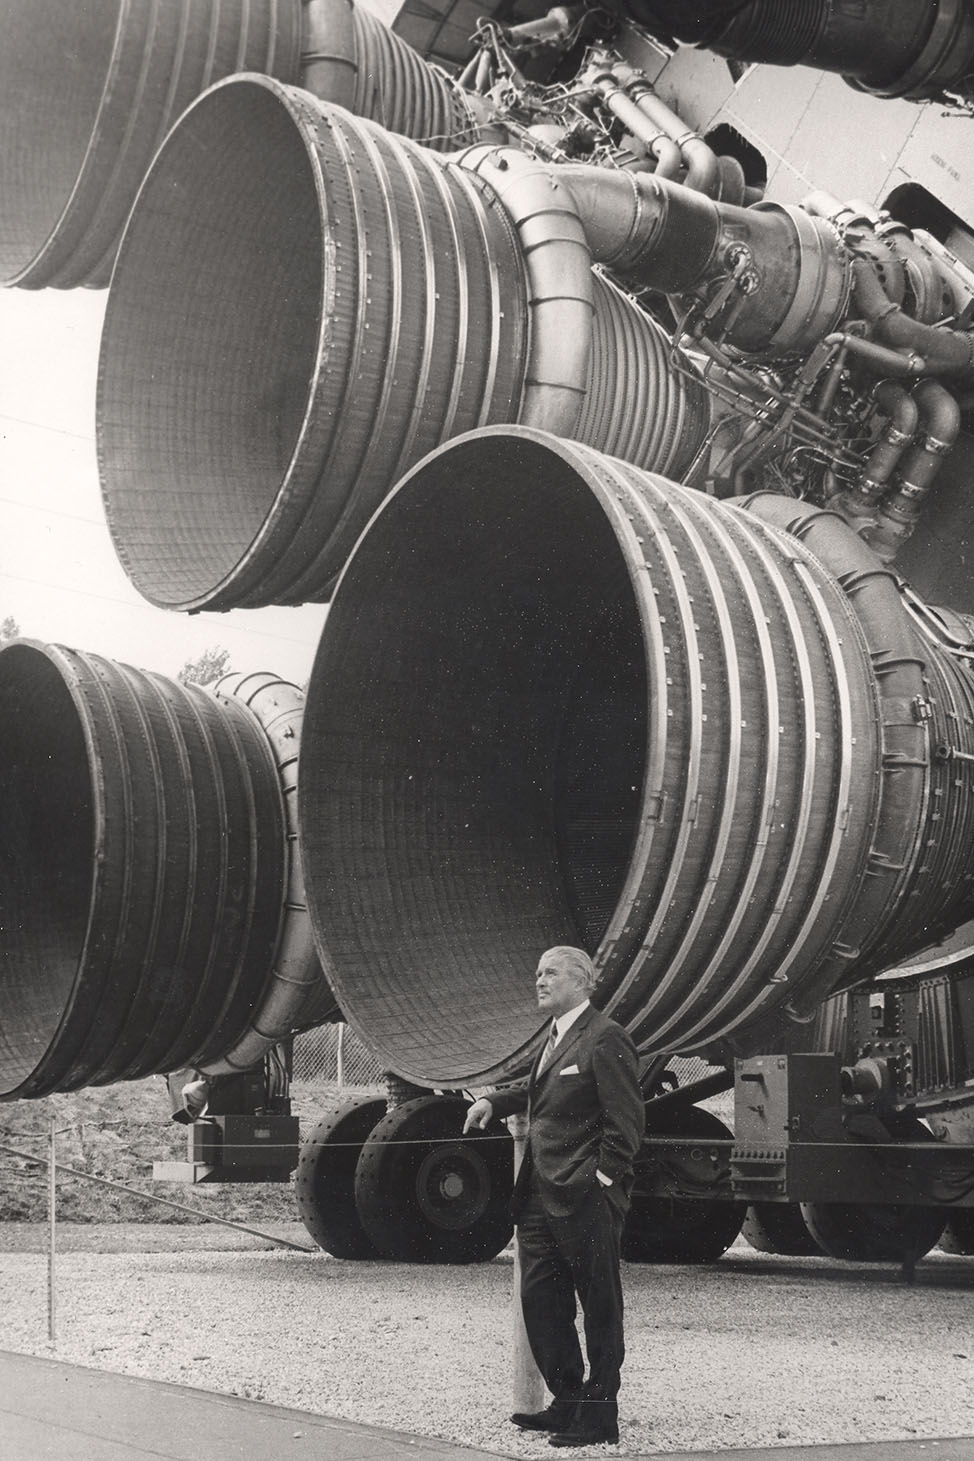 Test flight of the Saturn V